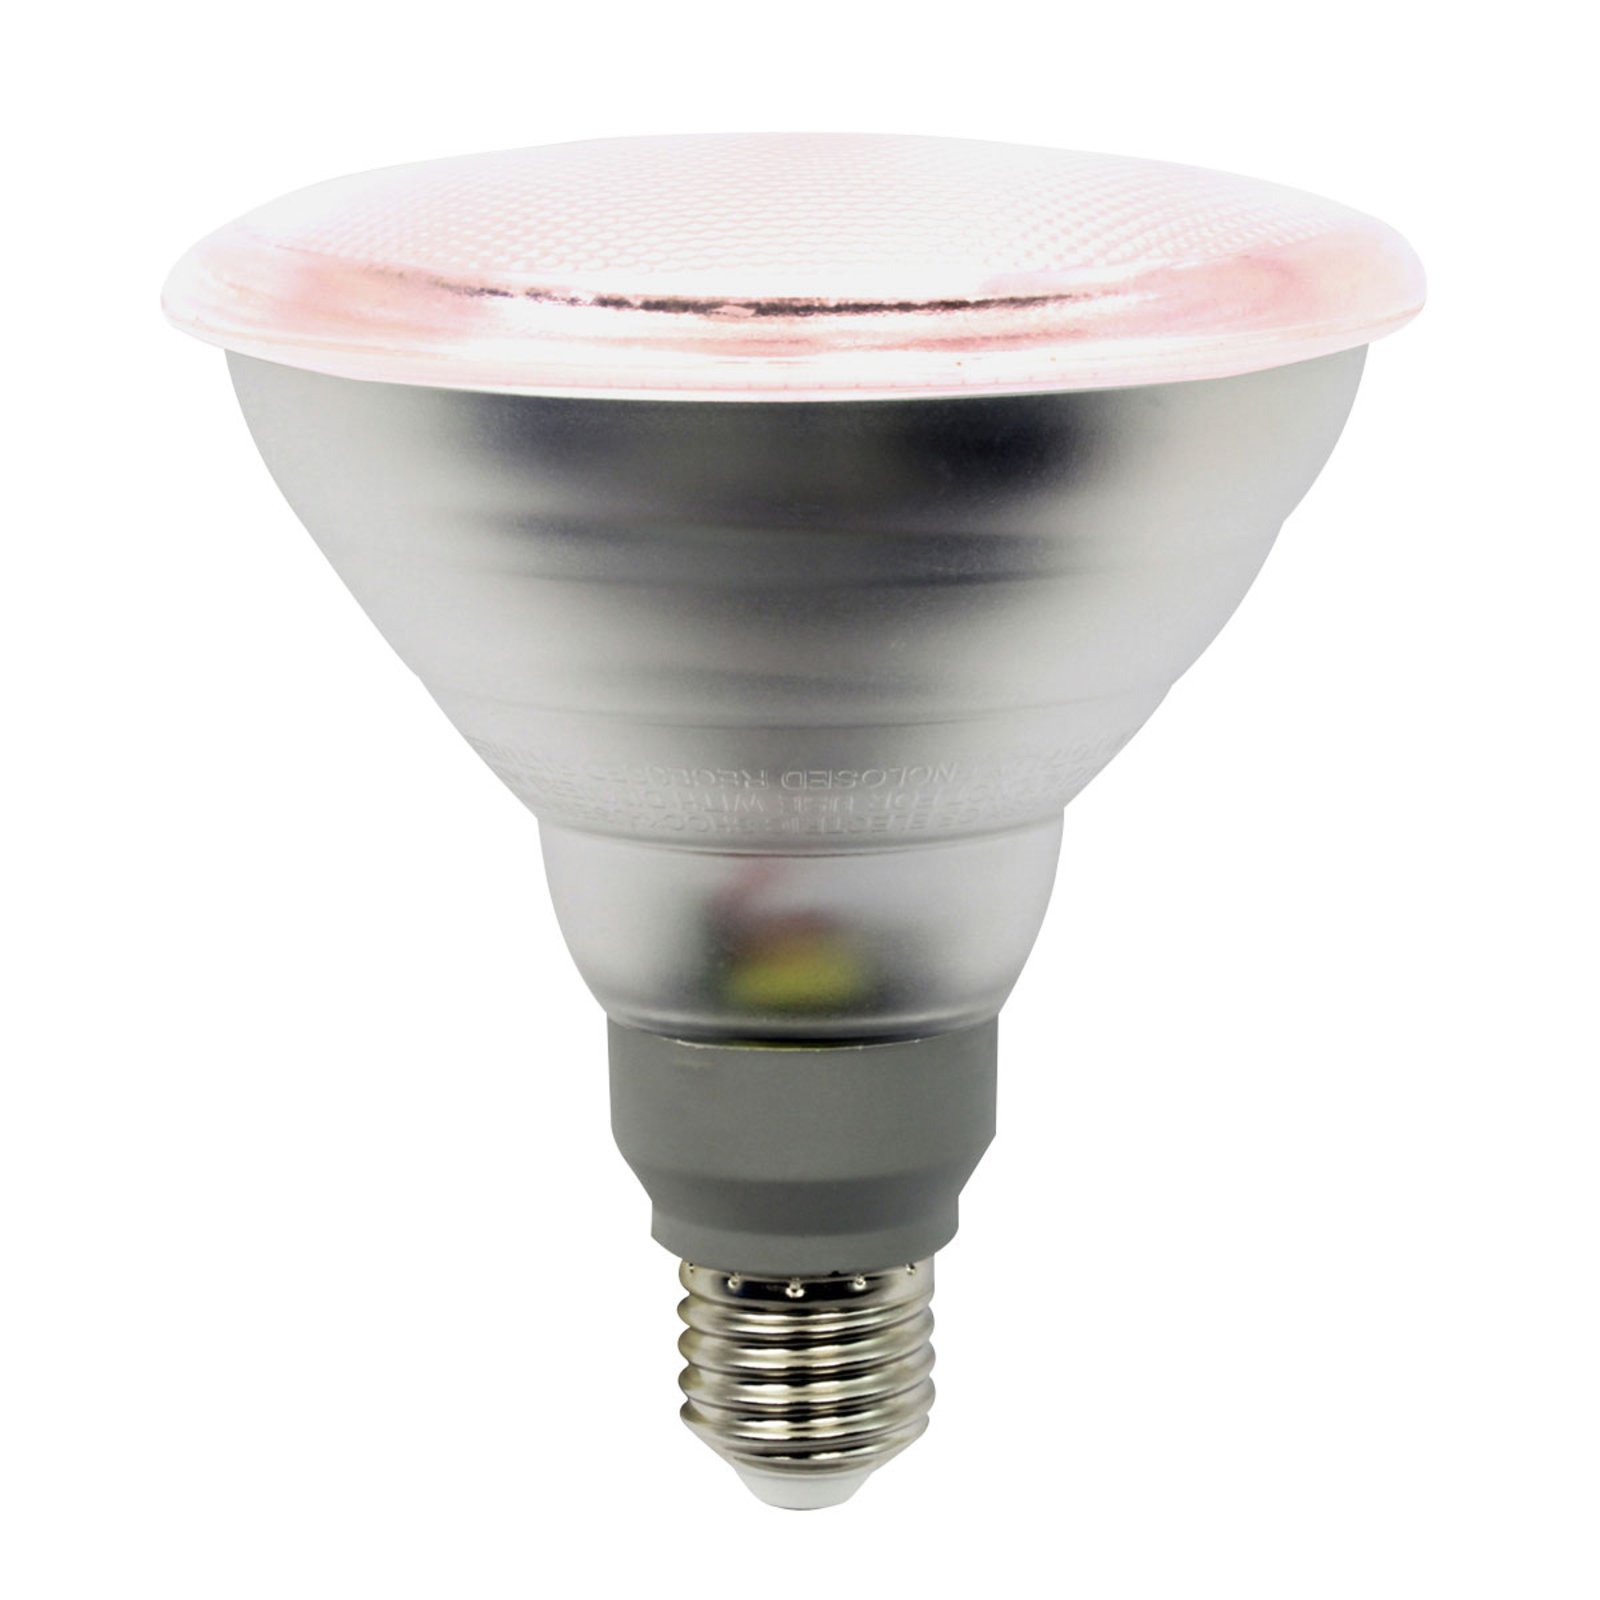 LED planten lamp E27 PAR38 12W 50° stralingshoek